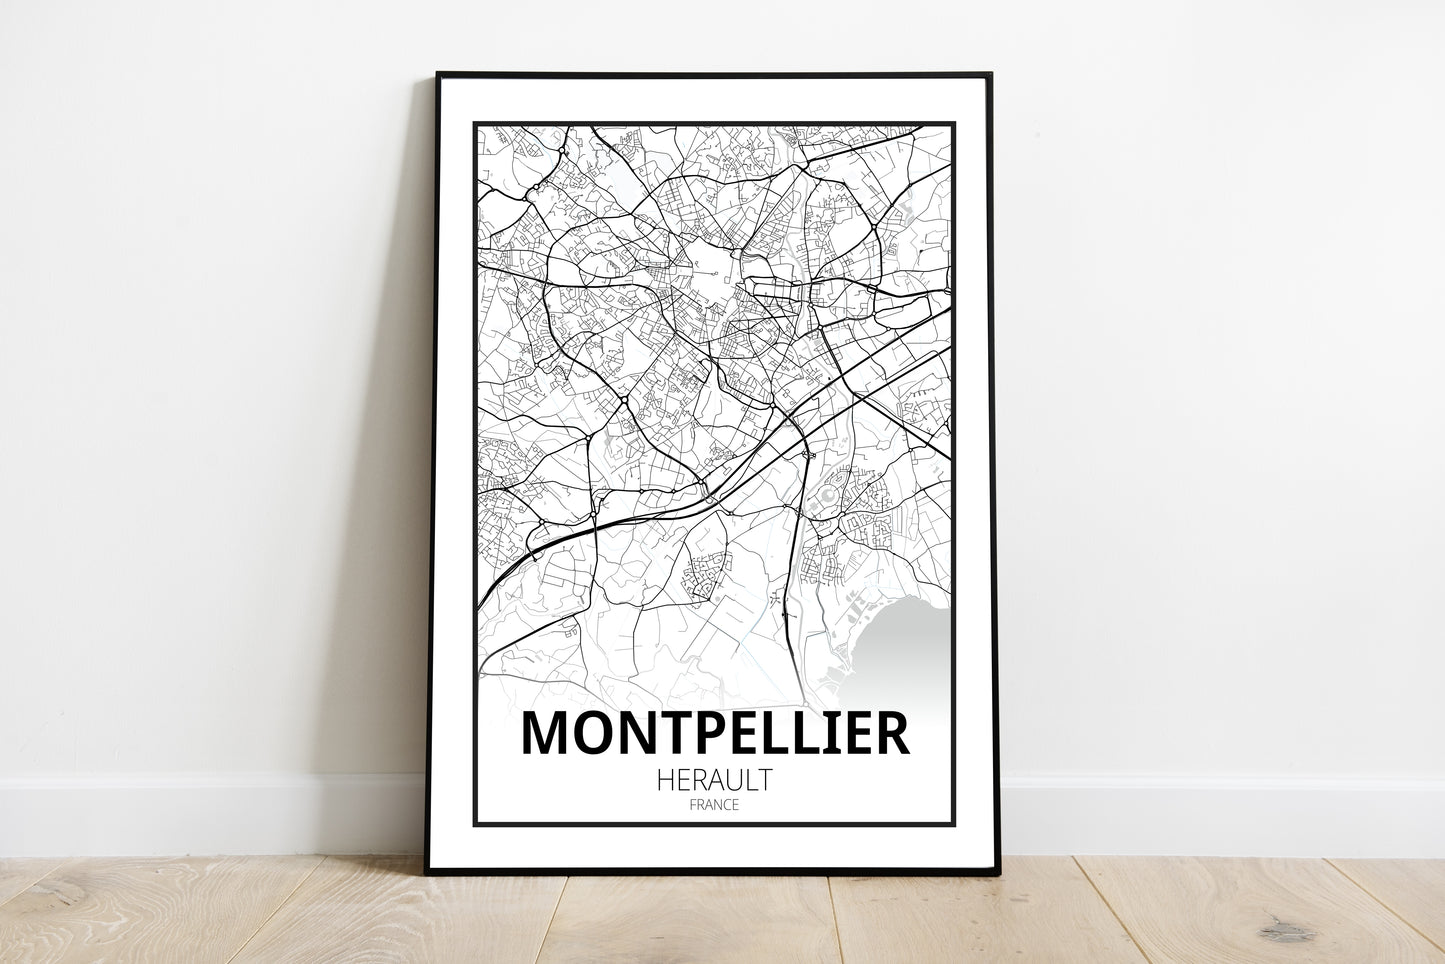 Montpellier - Hérault